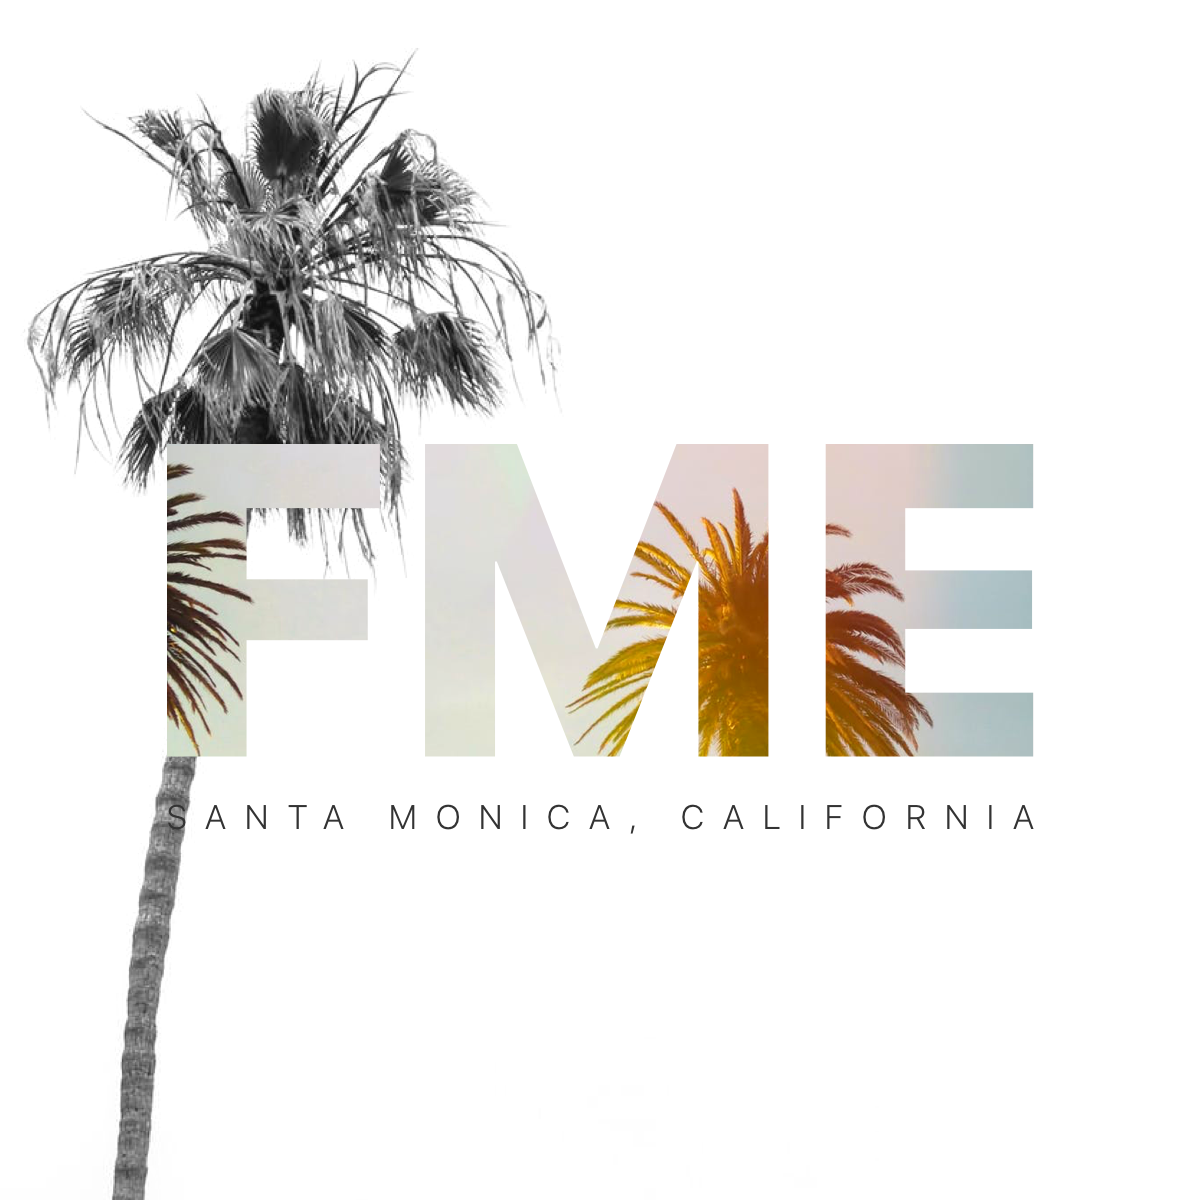 FountainheadME - Based in Santa Monica, California